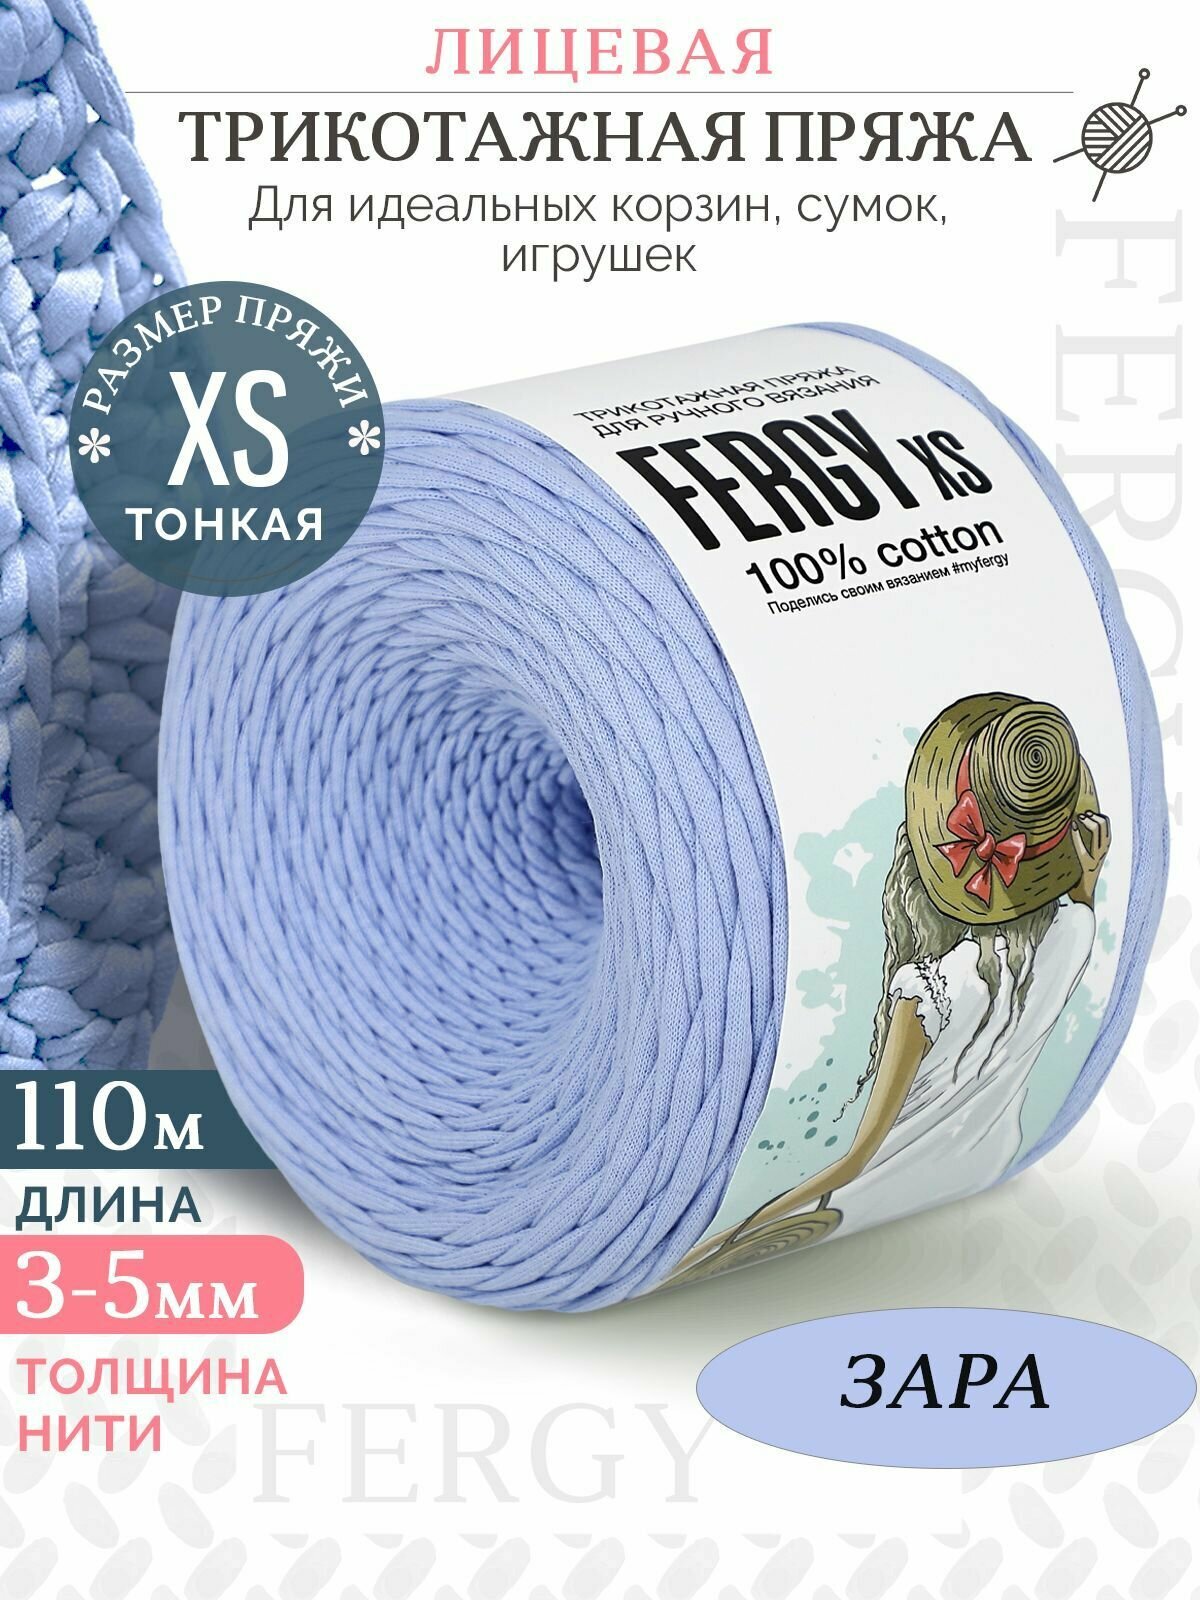 Трикотажная пряжа для вязания / Лицевая / 110м / XS 3-5мм / зара